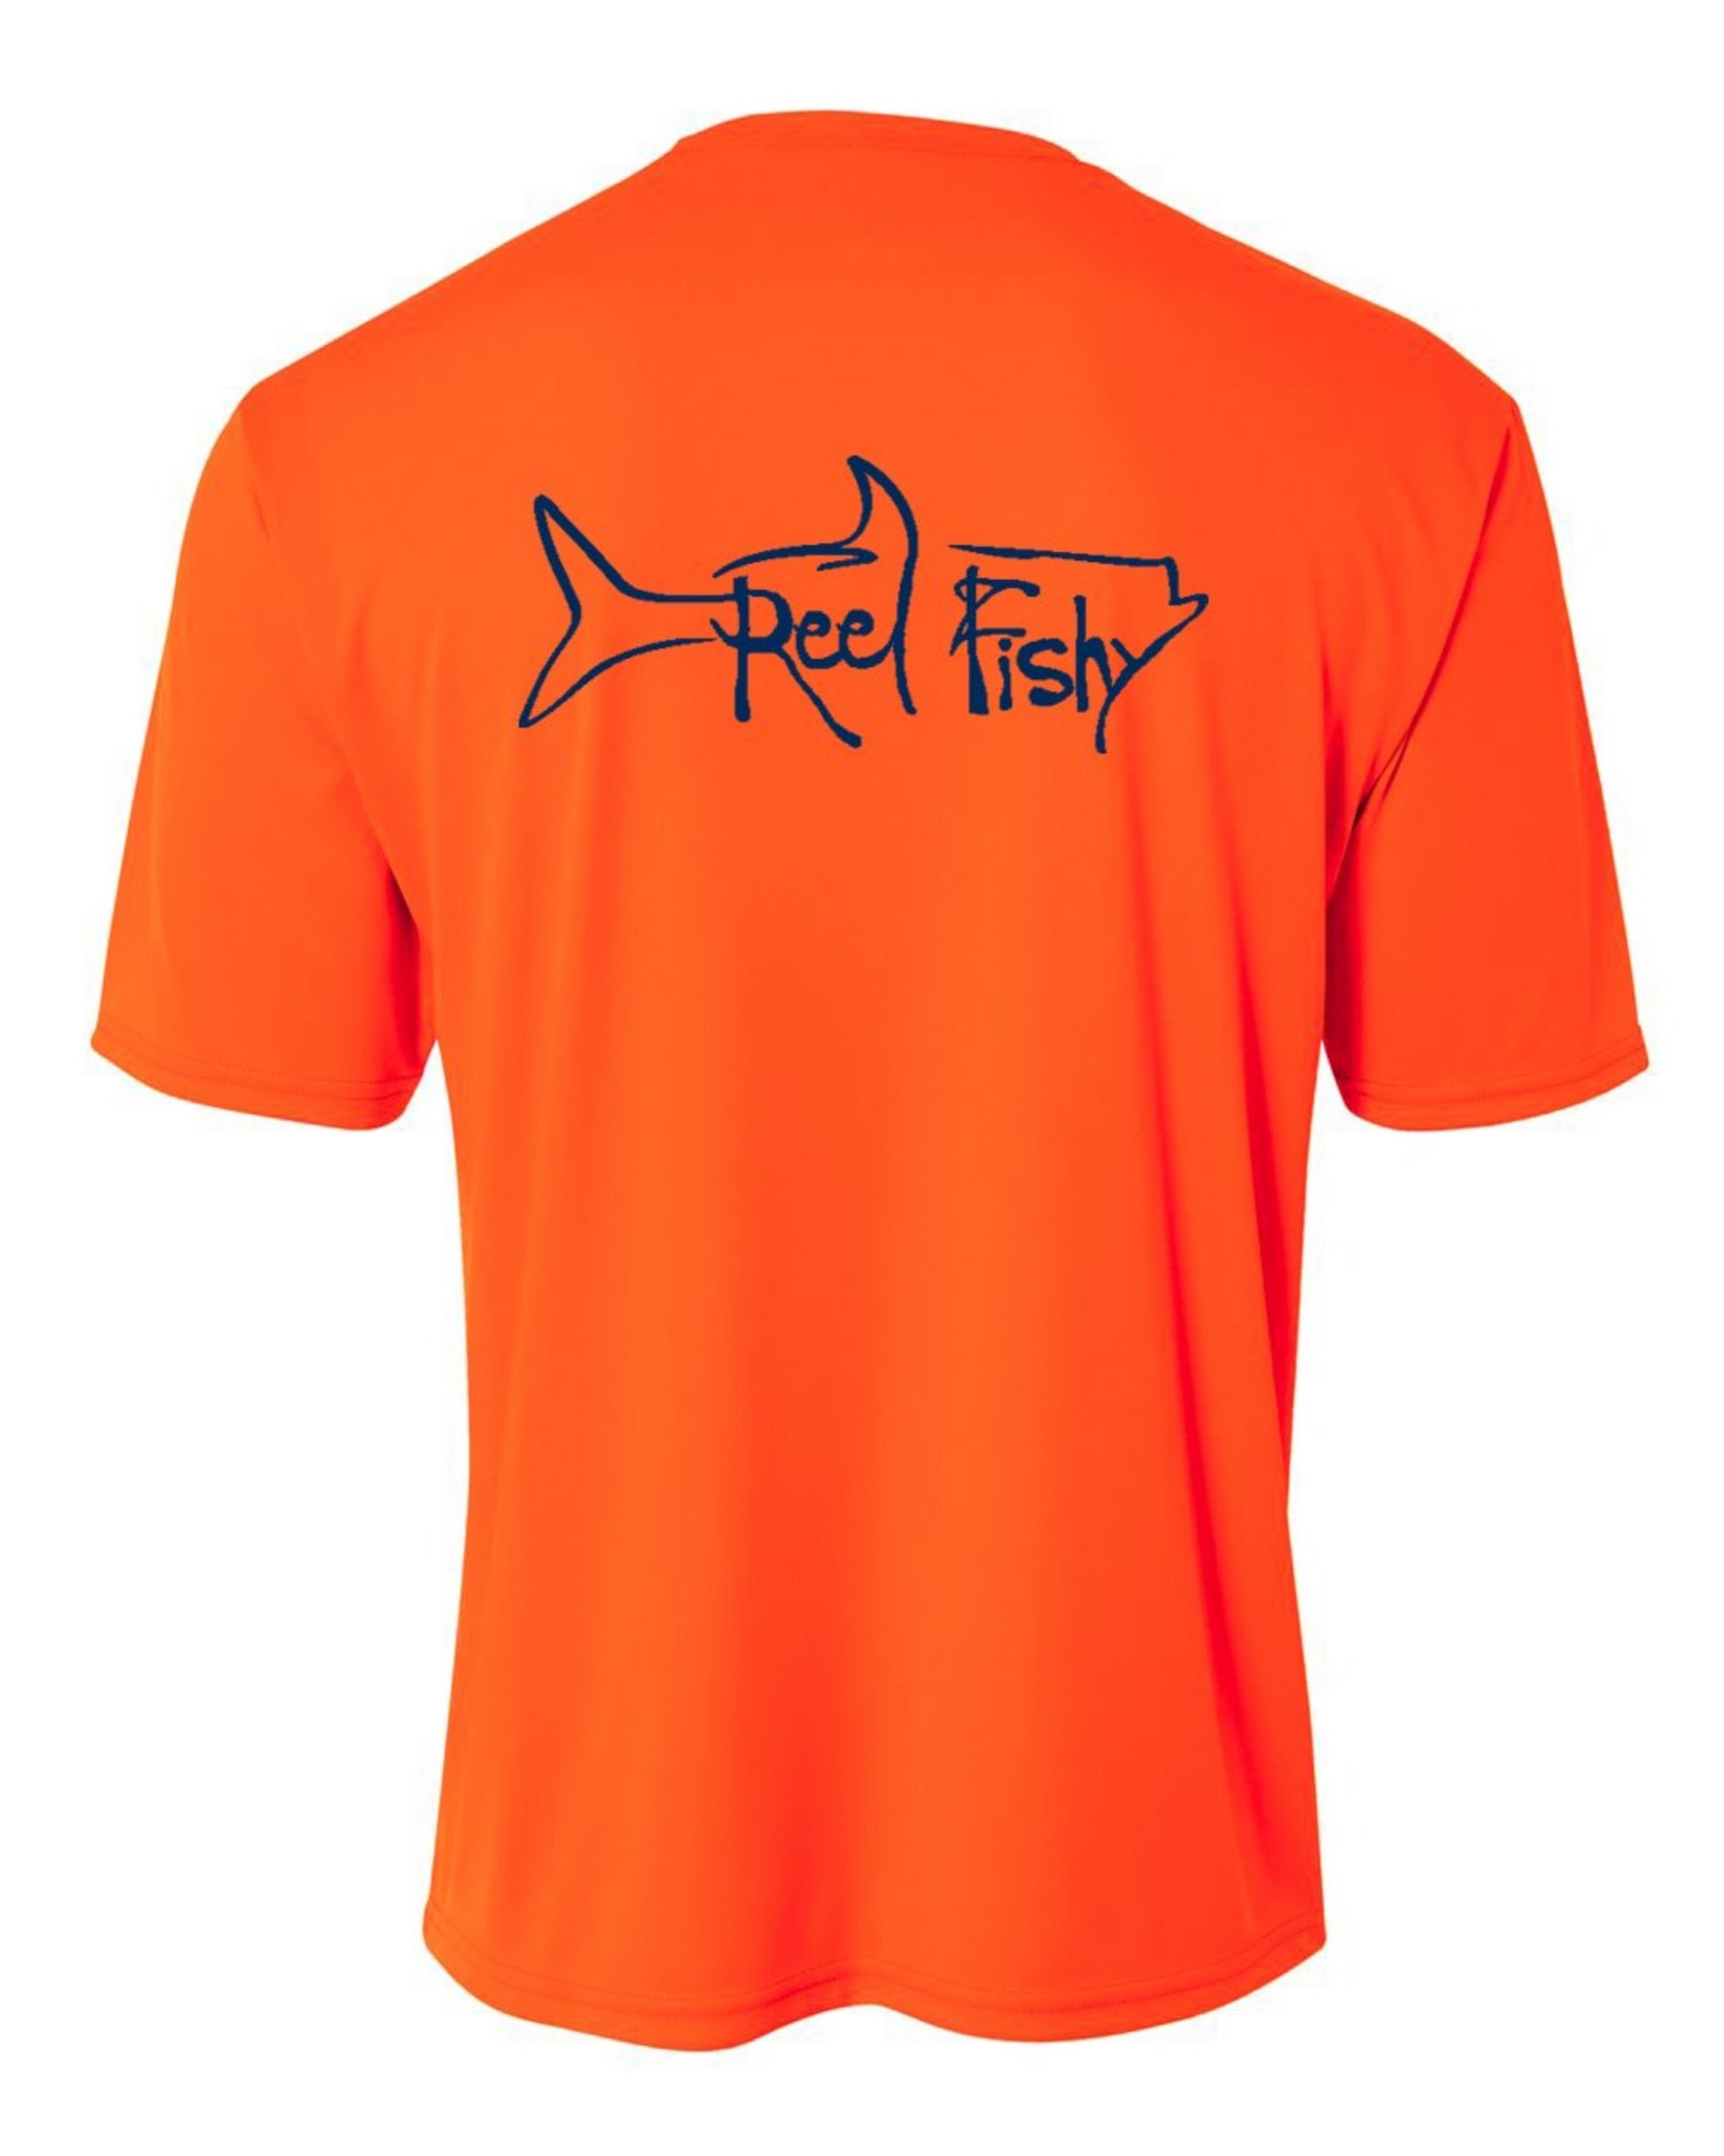 Youth Performance Dry-Fit Tarpon Fishing Shirts 50+Upf Sun Protection - Reel Fishy Apparel L / Neon Orange S/S